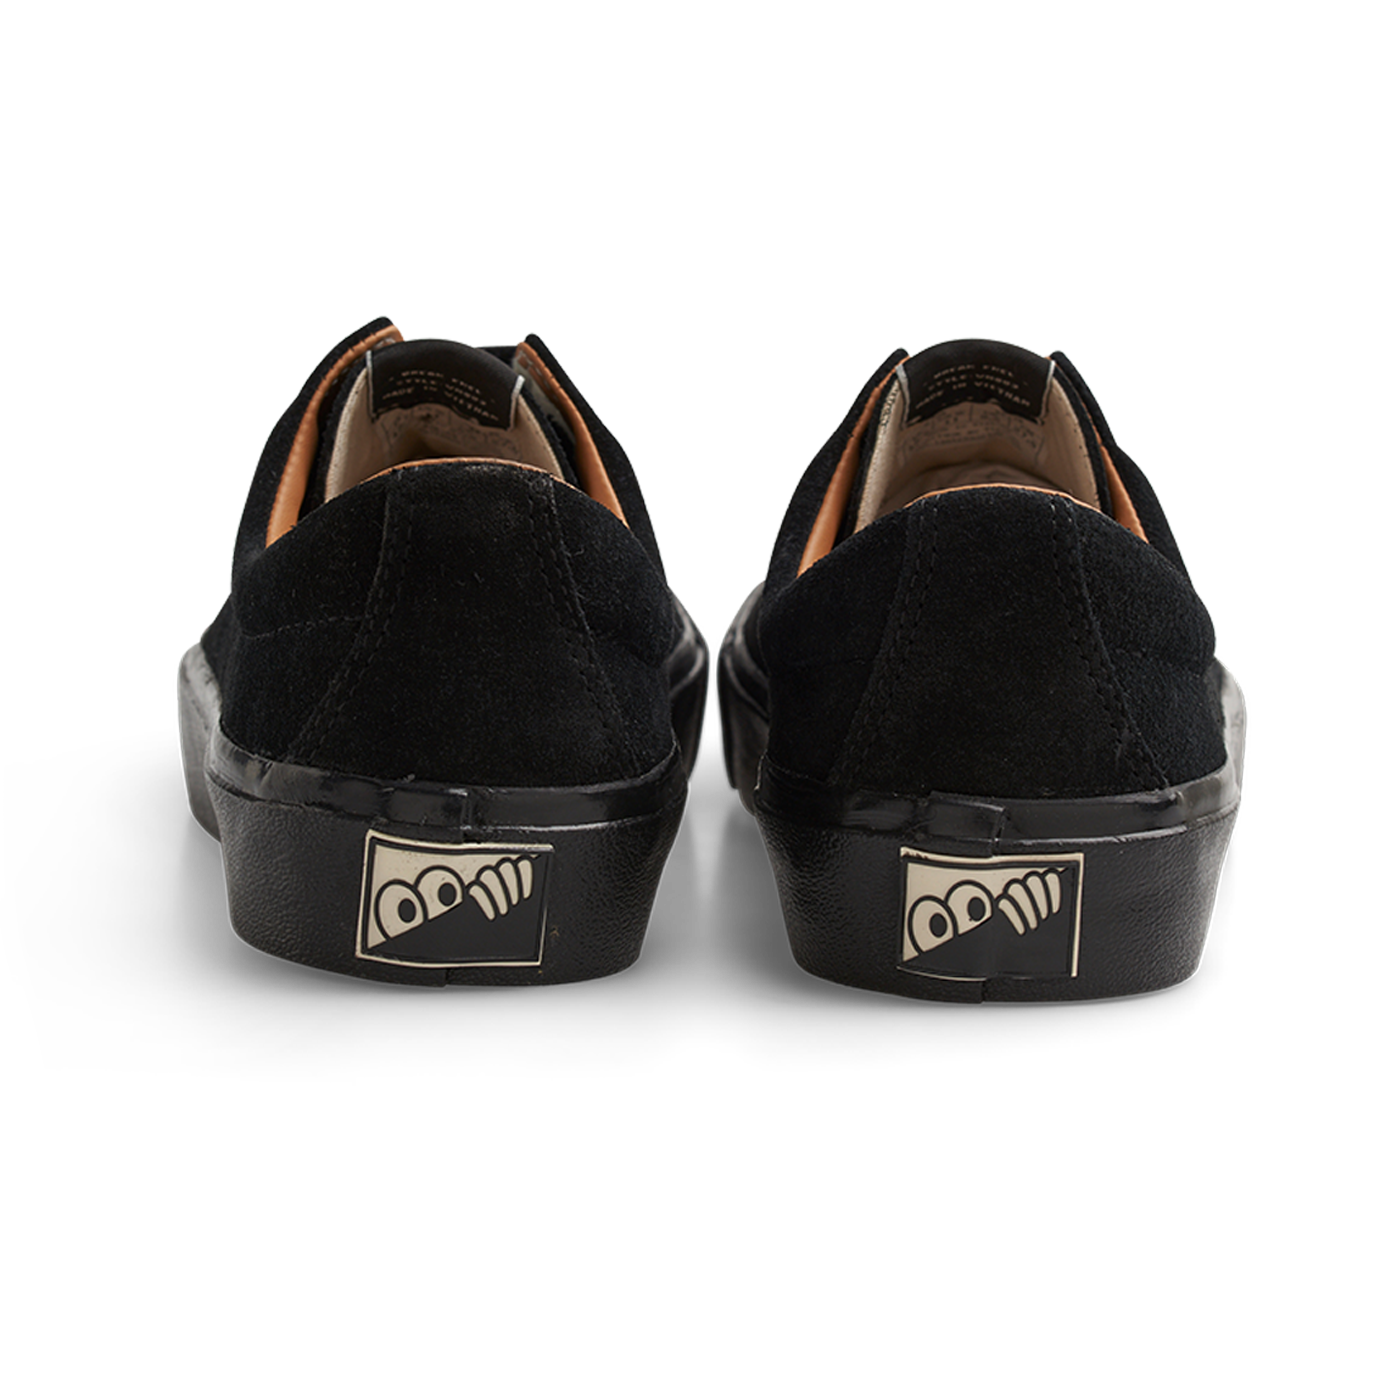 Last Resort 'VM003 Suede Lo' Skate Shoes (Black / Black)